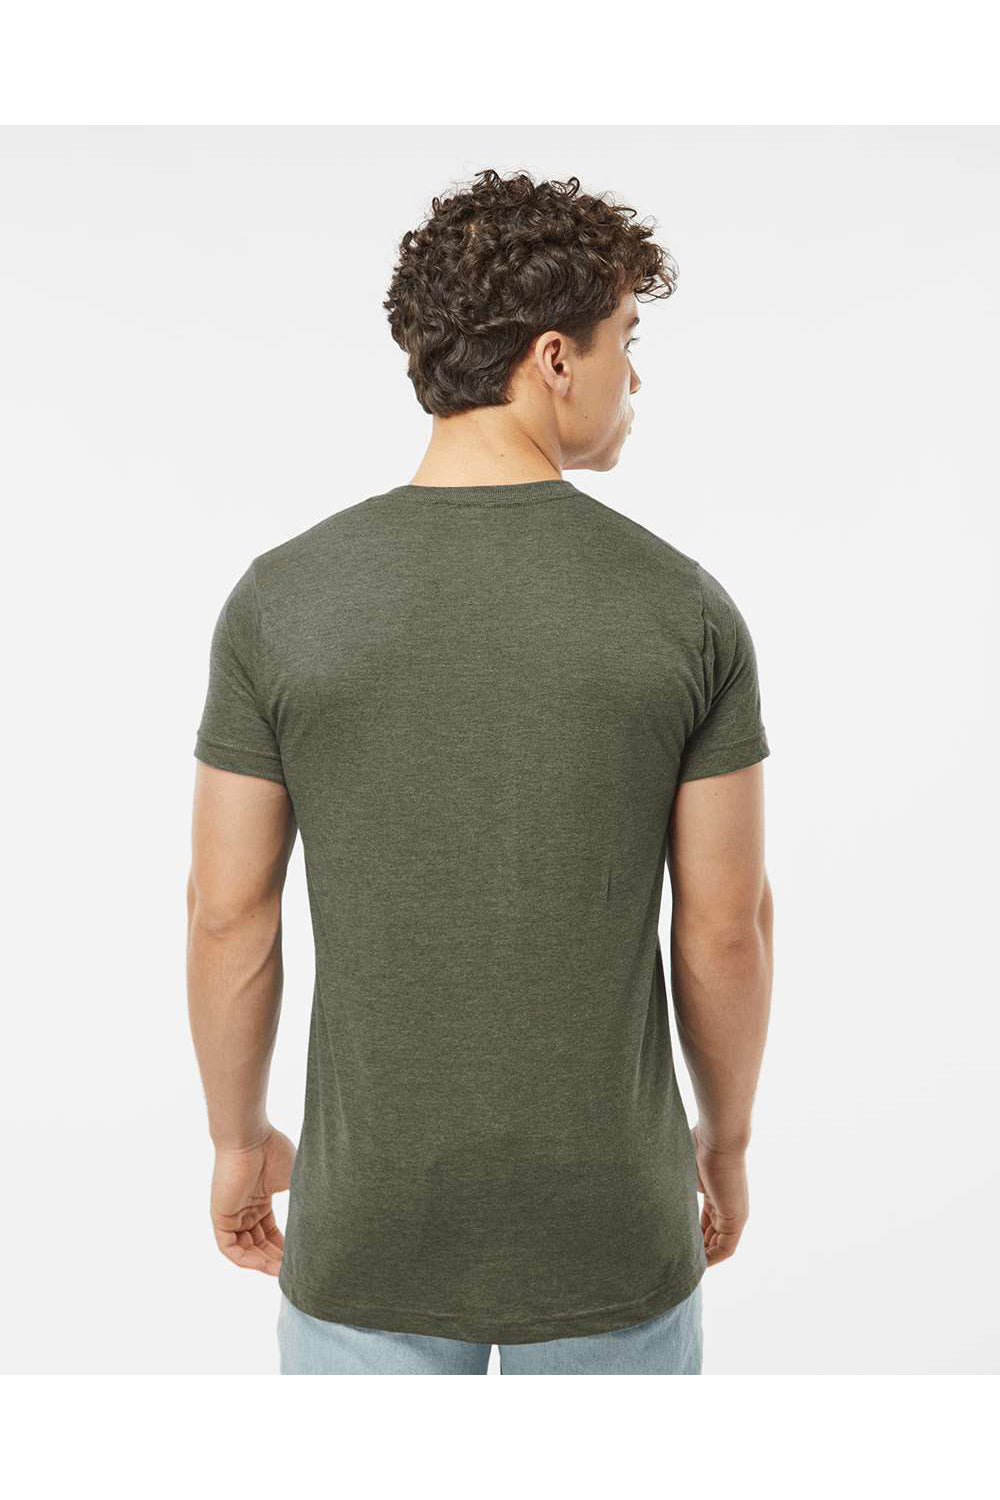 Tultex 202 Mens Fine Jersey Short Sleeve Crewneck T-Shirt Heather Military Green Model Back